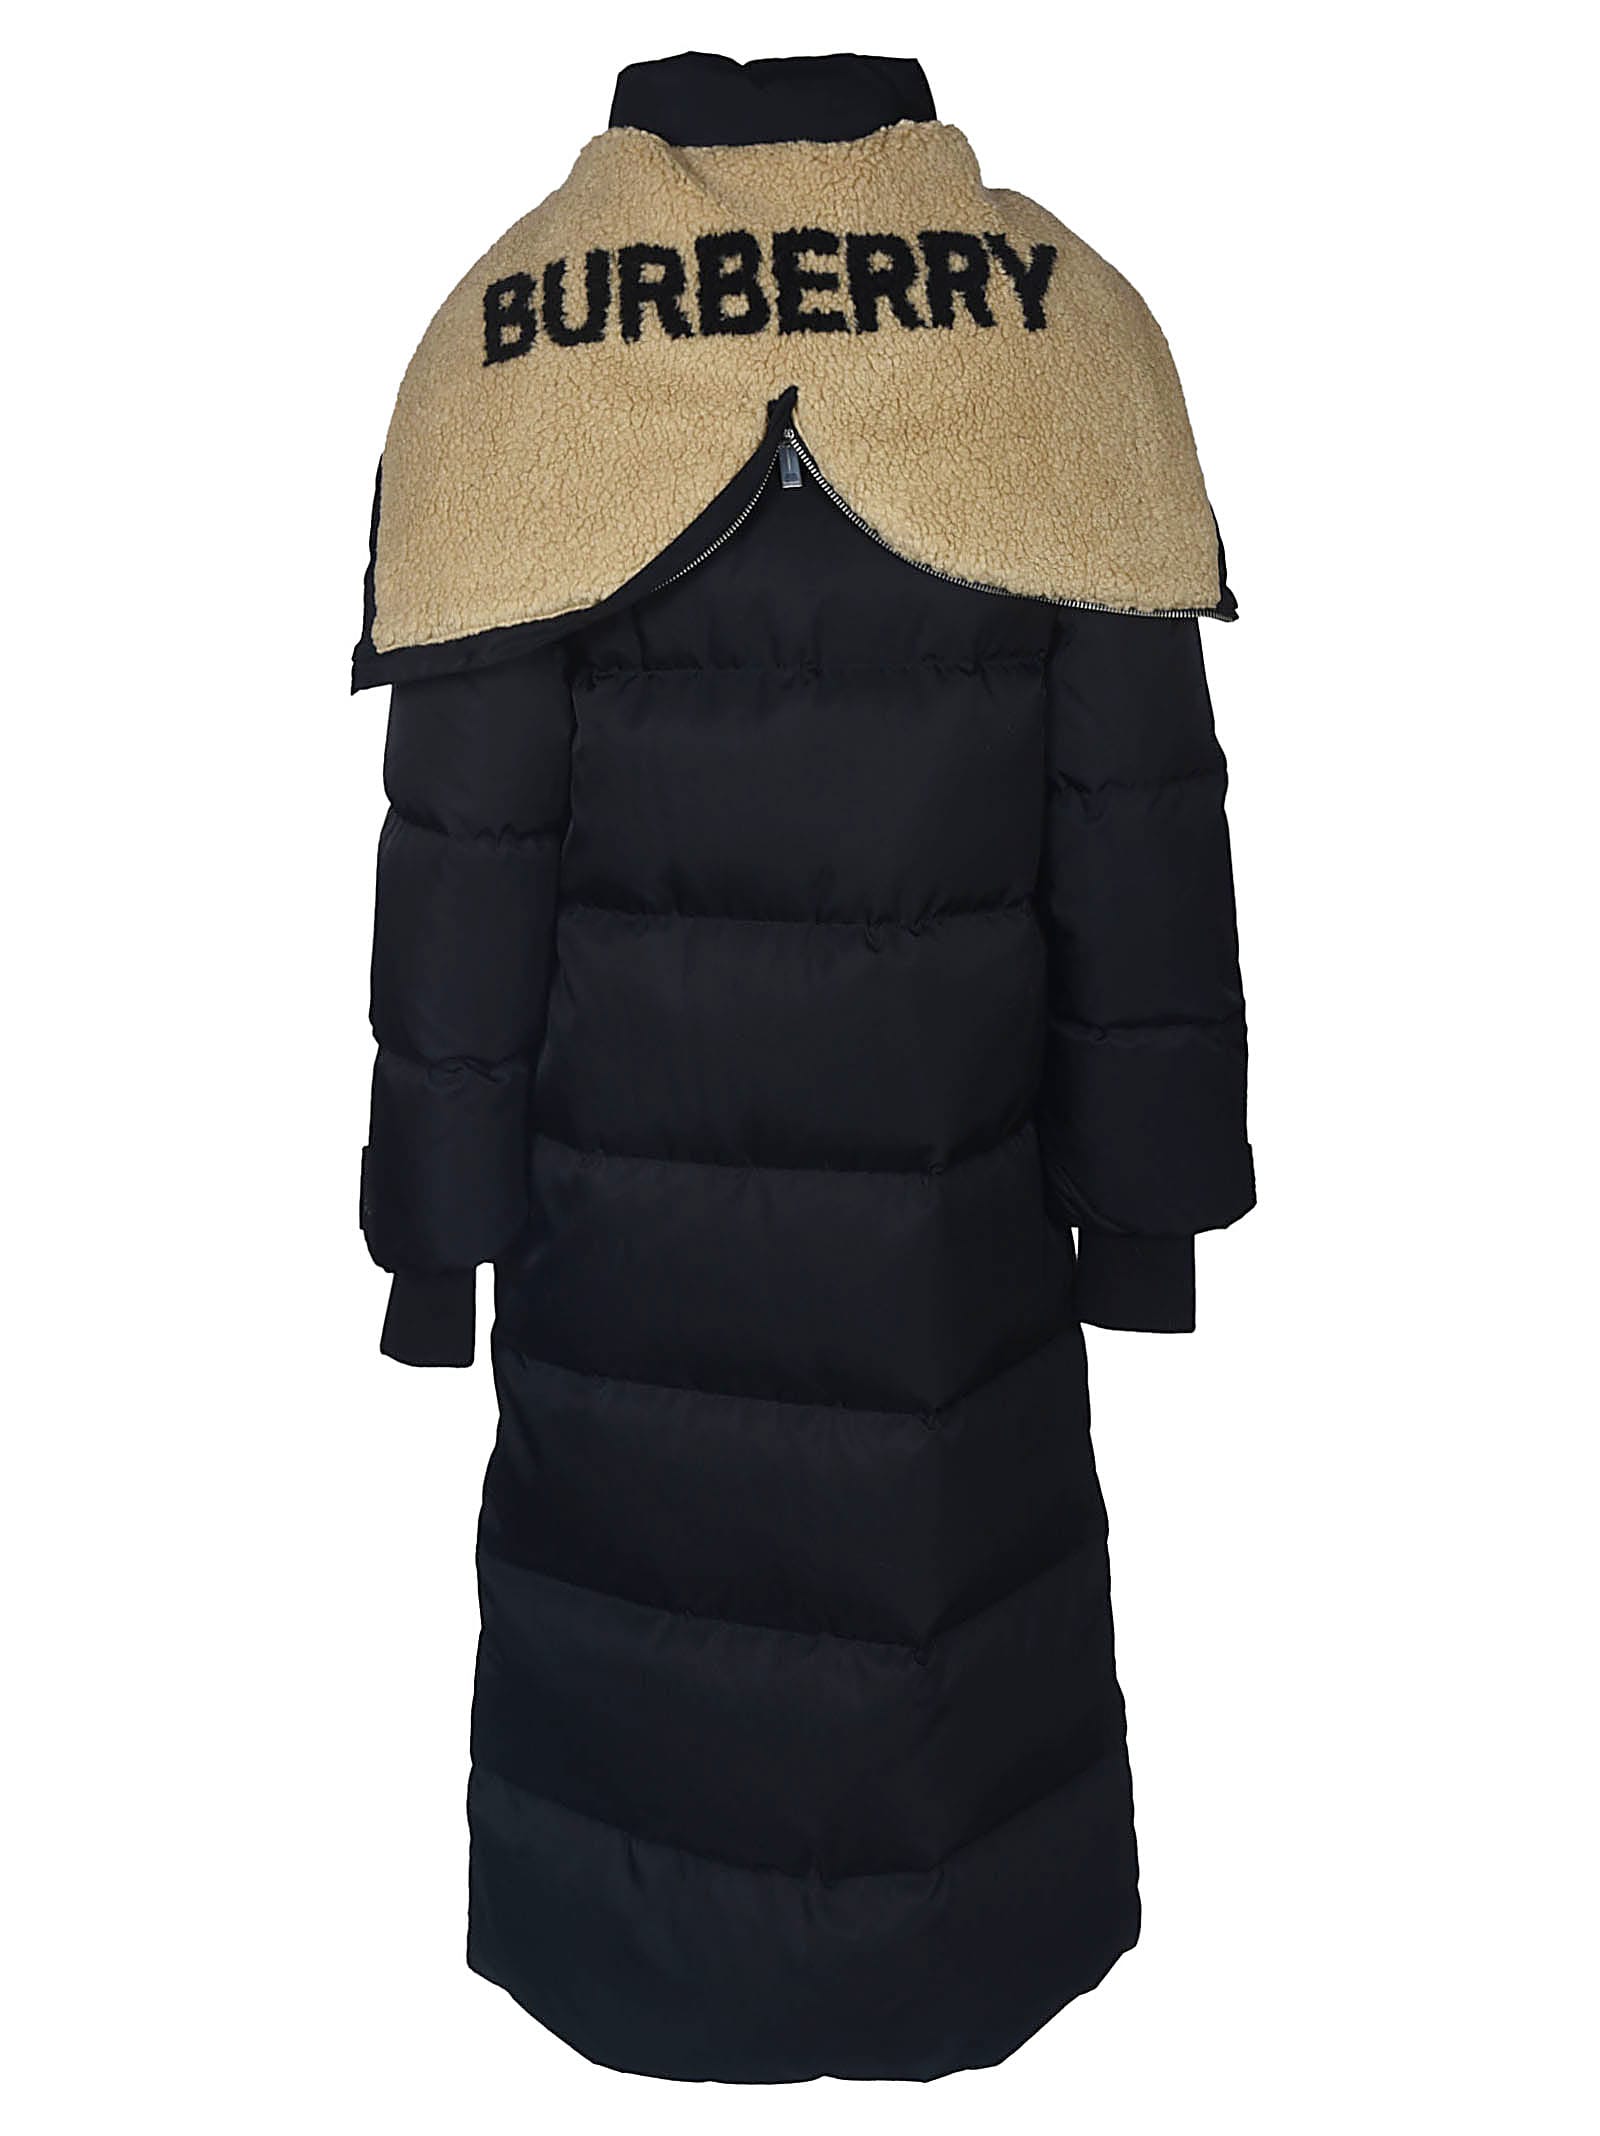 burberry jacket sale